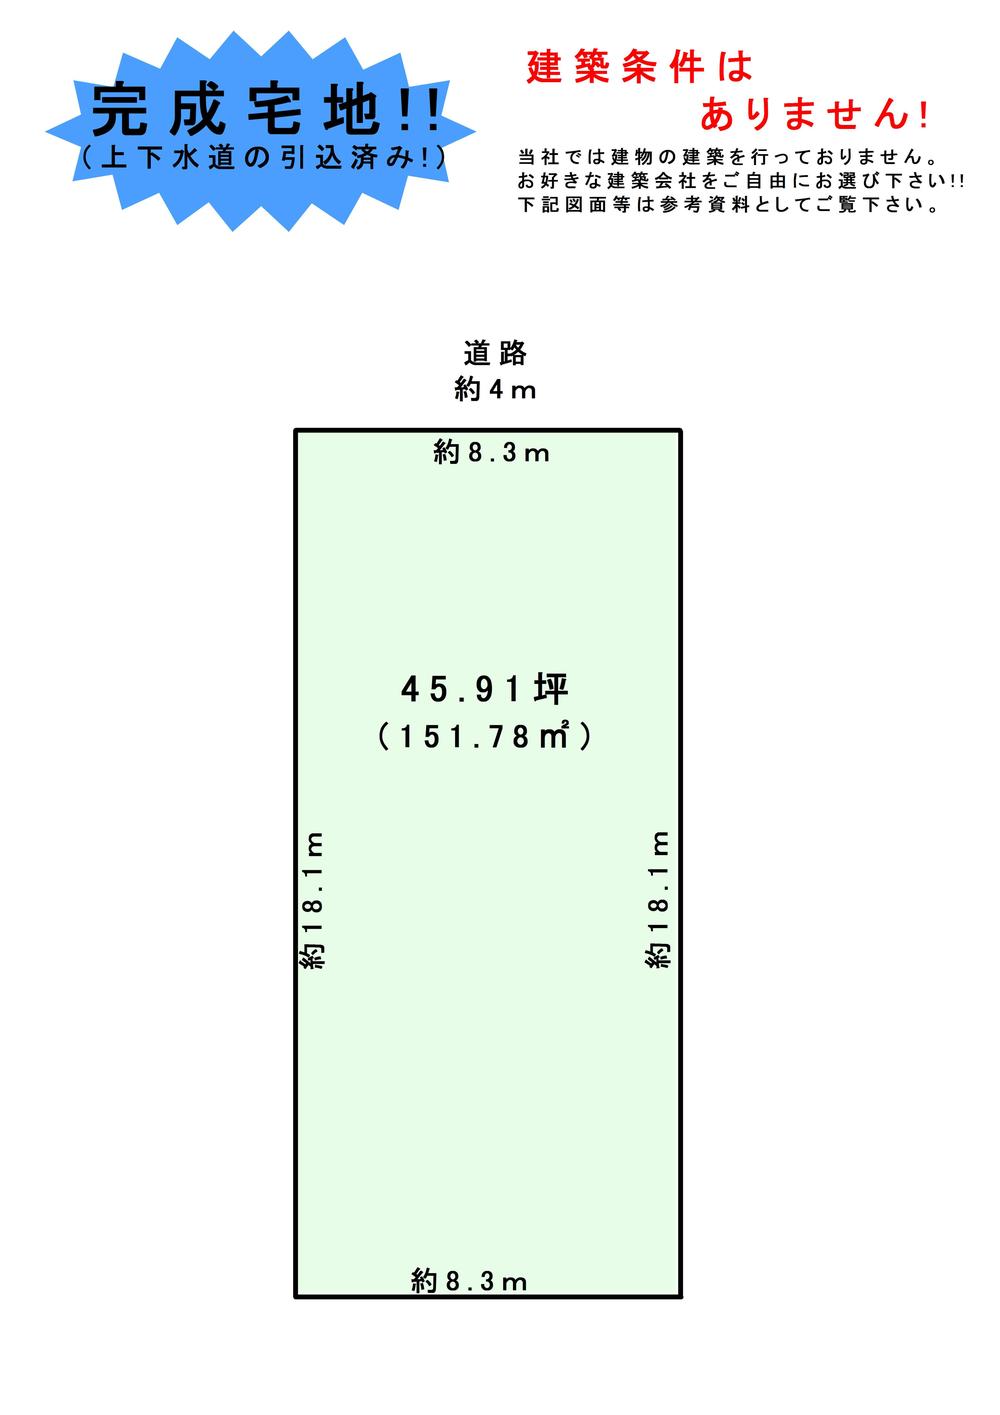 Compartment figure. Land price 12.8 million yen, Land area 151.78 sq m